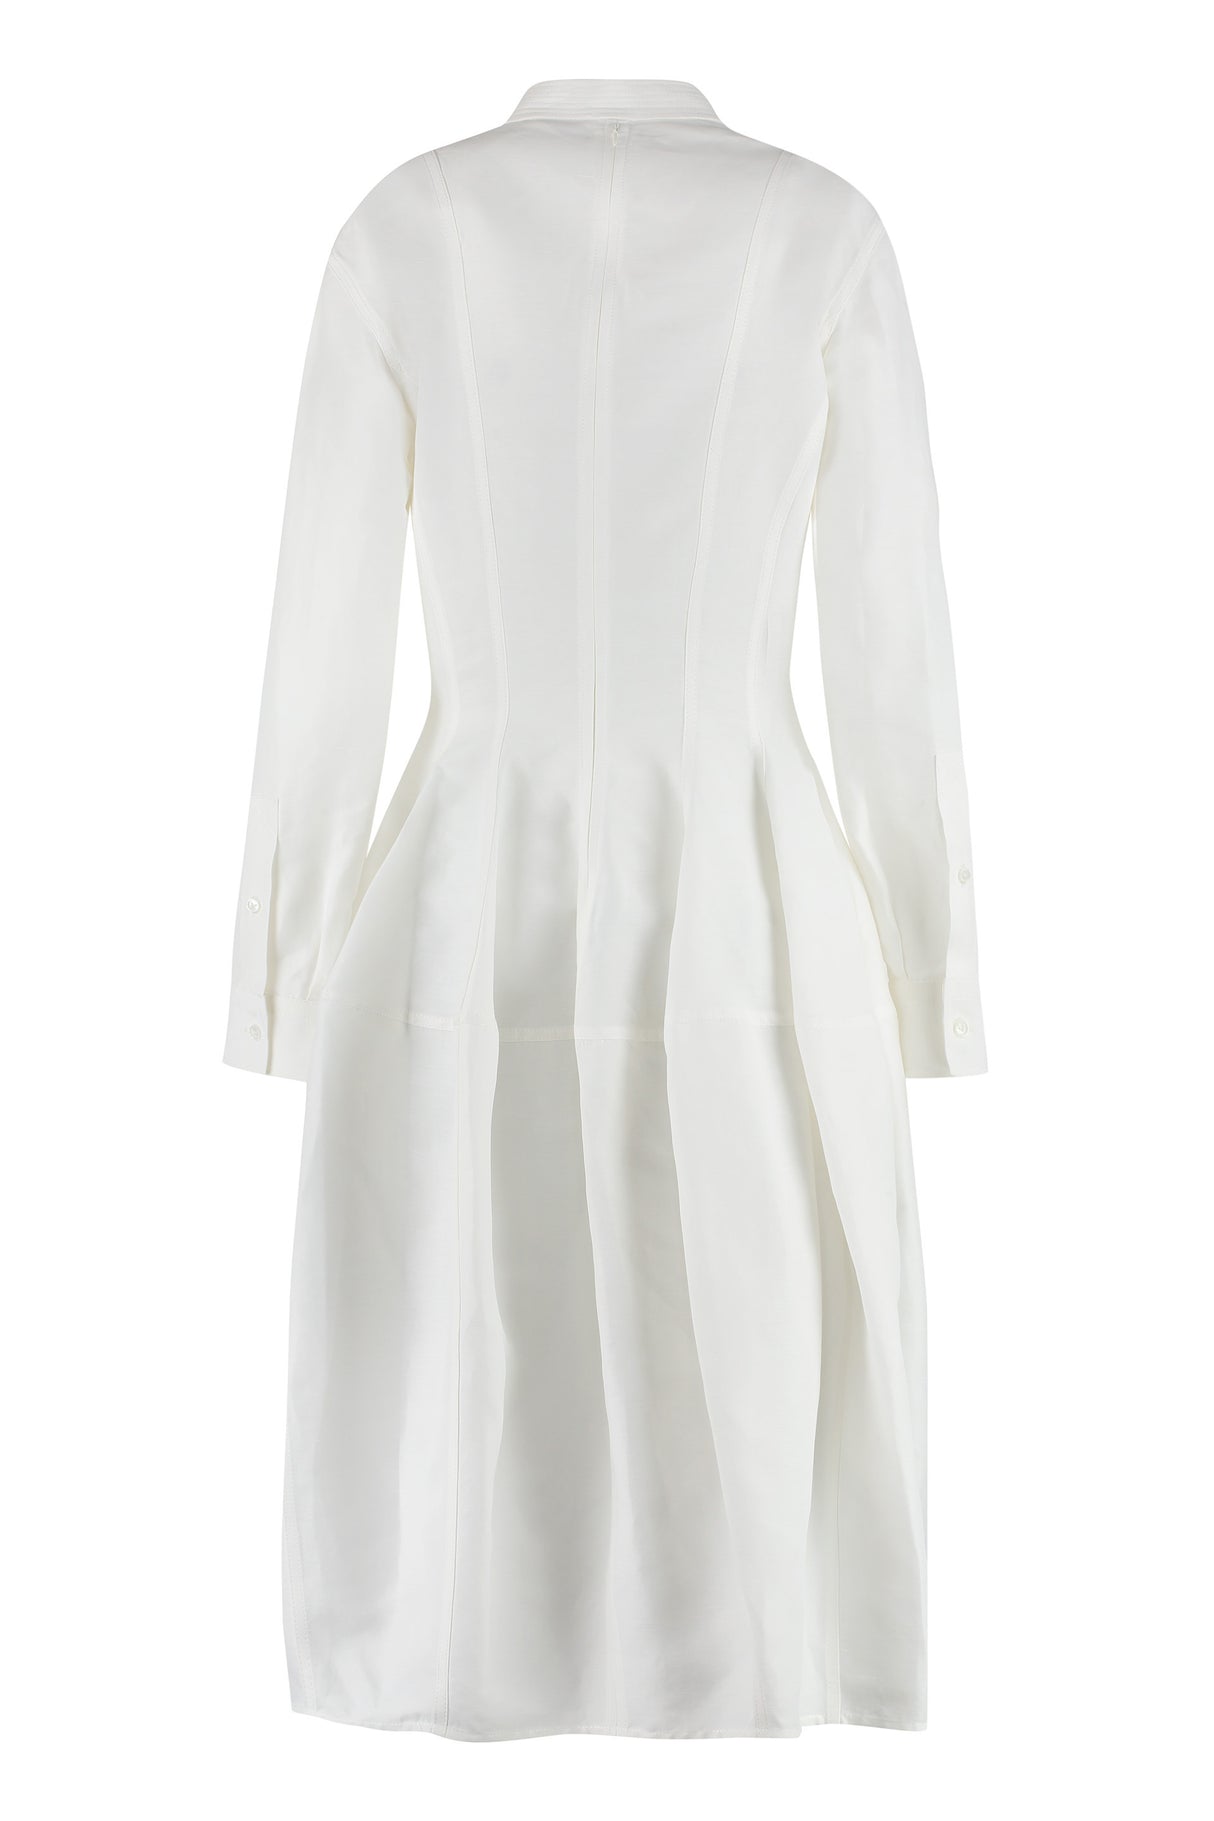 BOTTEGA VENETA Chalk-Colored Linen and Viscose Midi Dress with Folded Sleeves